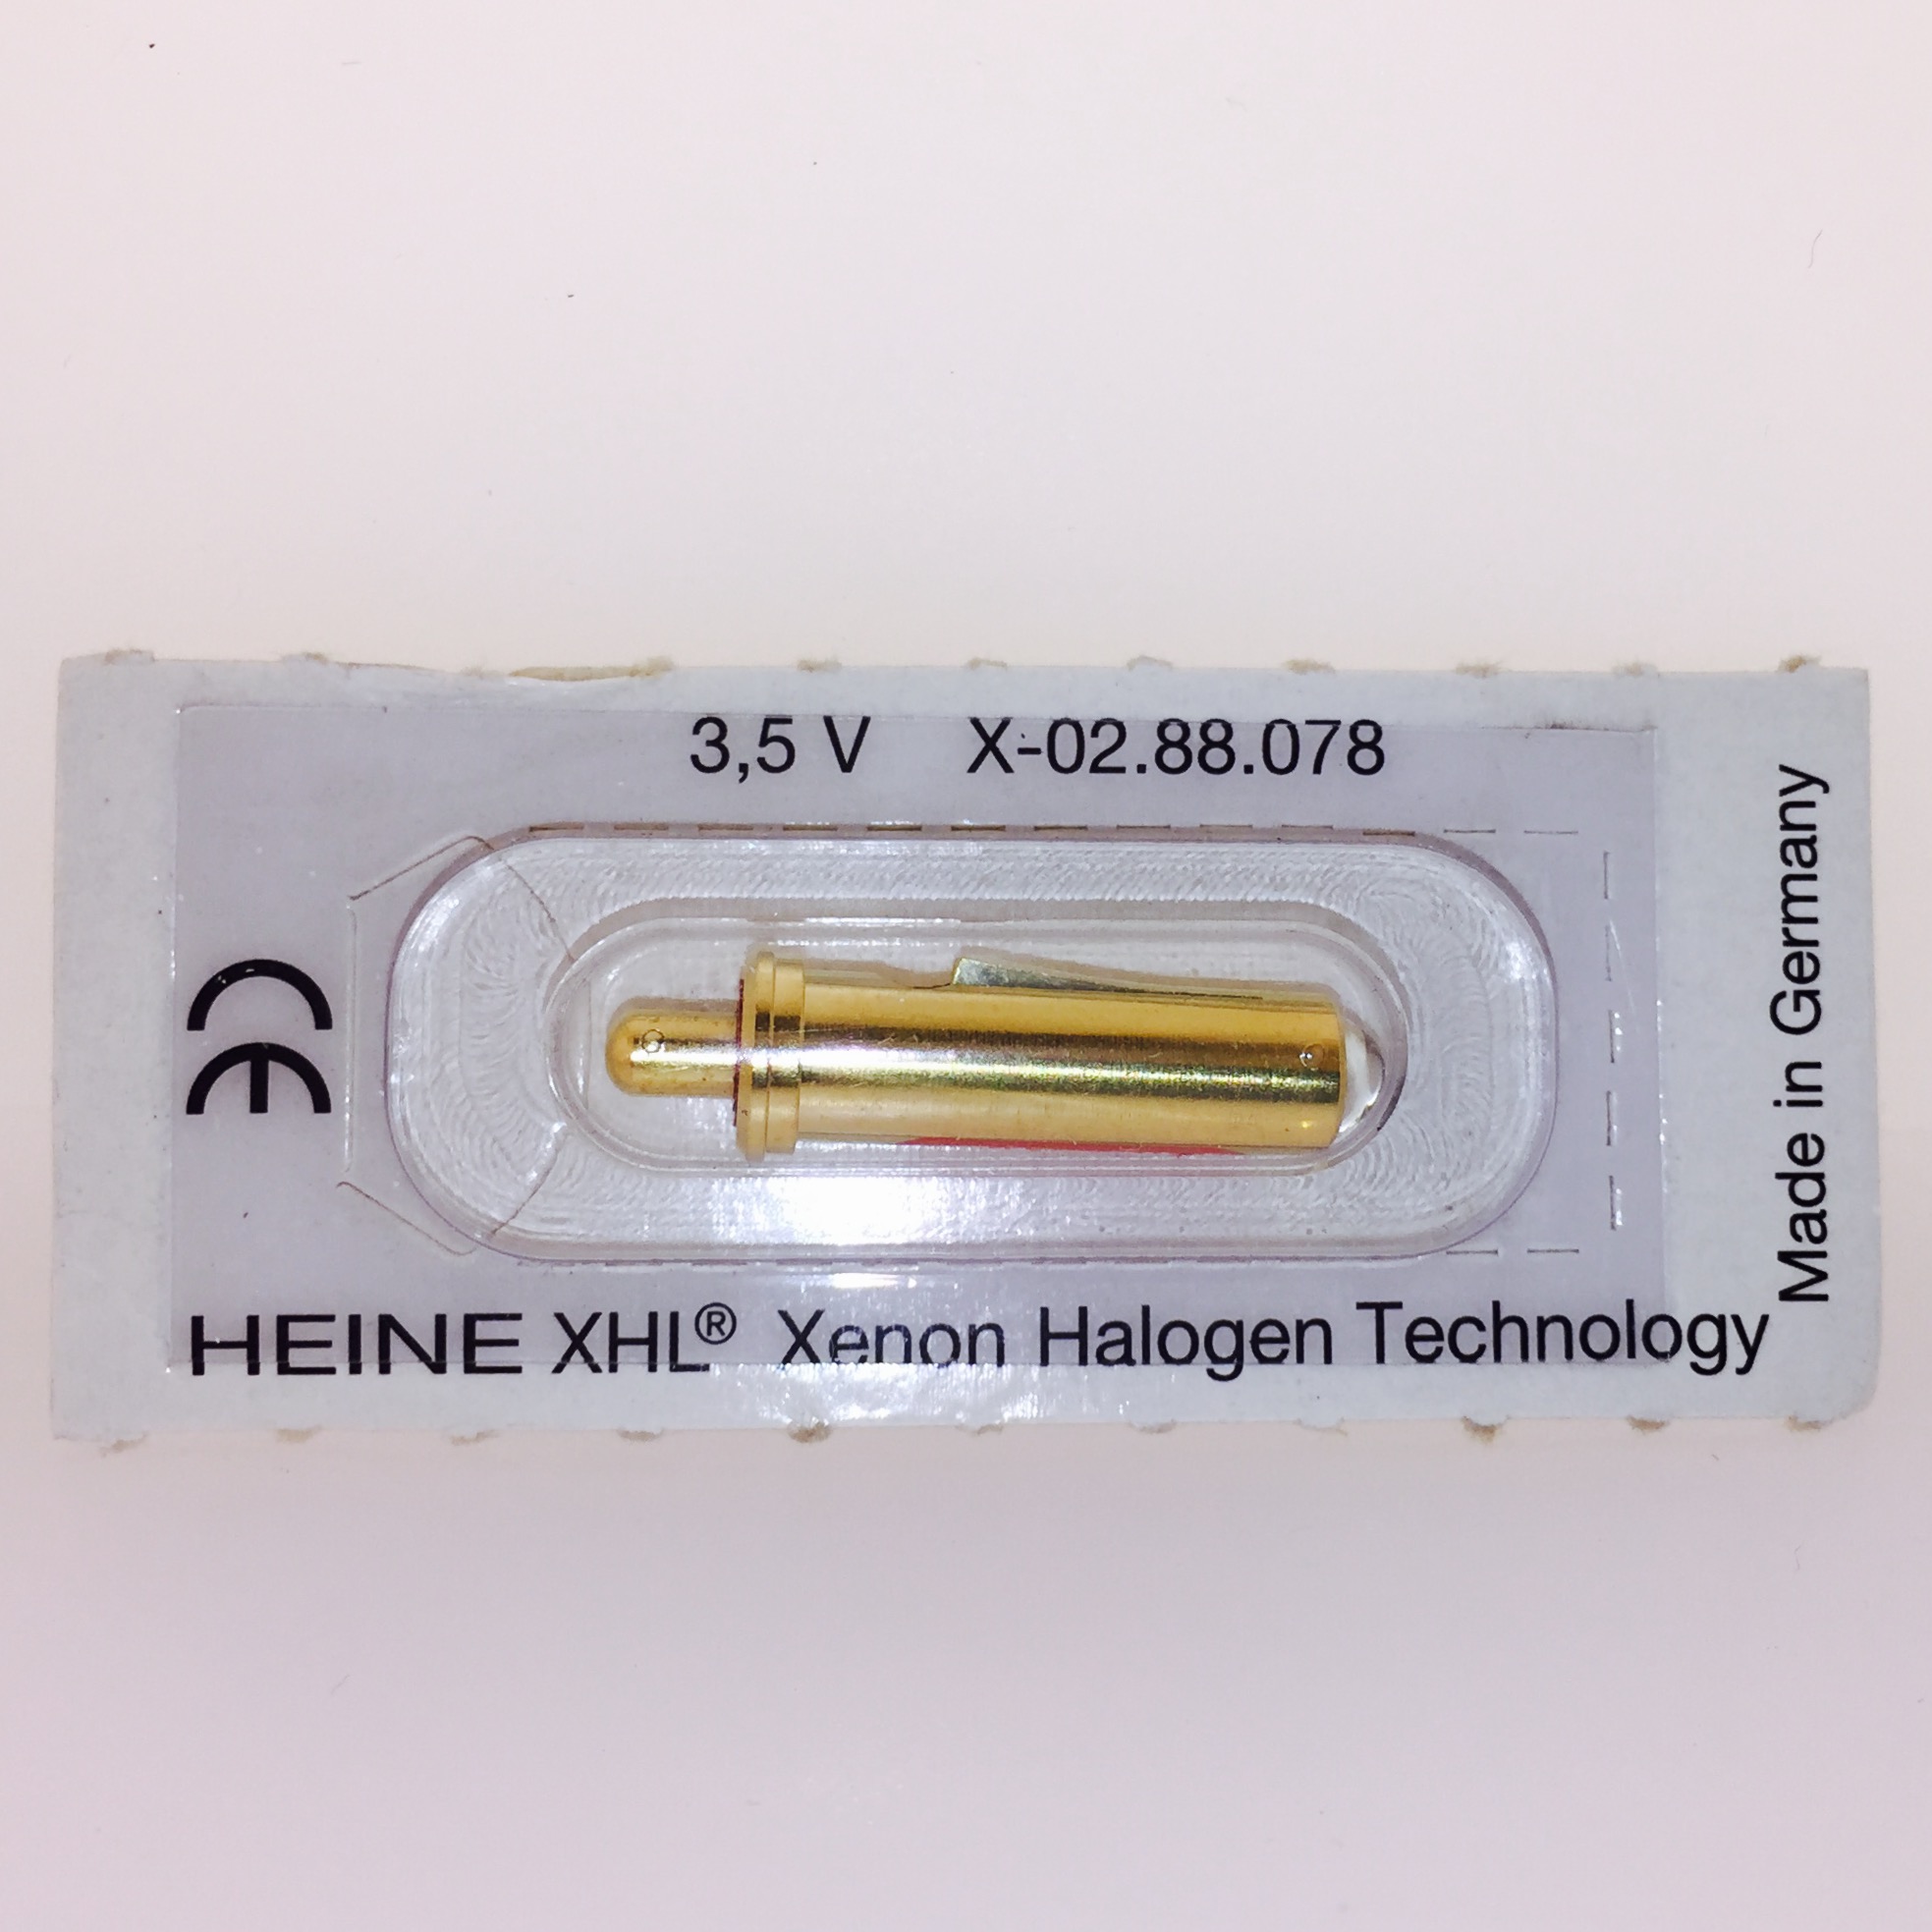 XENON-HALOGEN OPERATIVE DIAGNOSTIC SET - 3.5 V